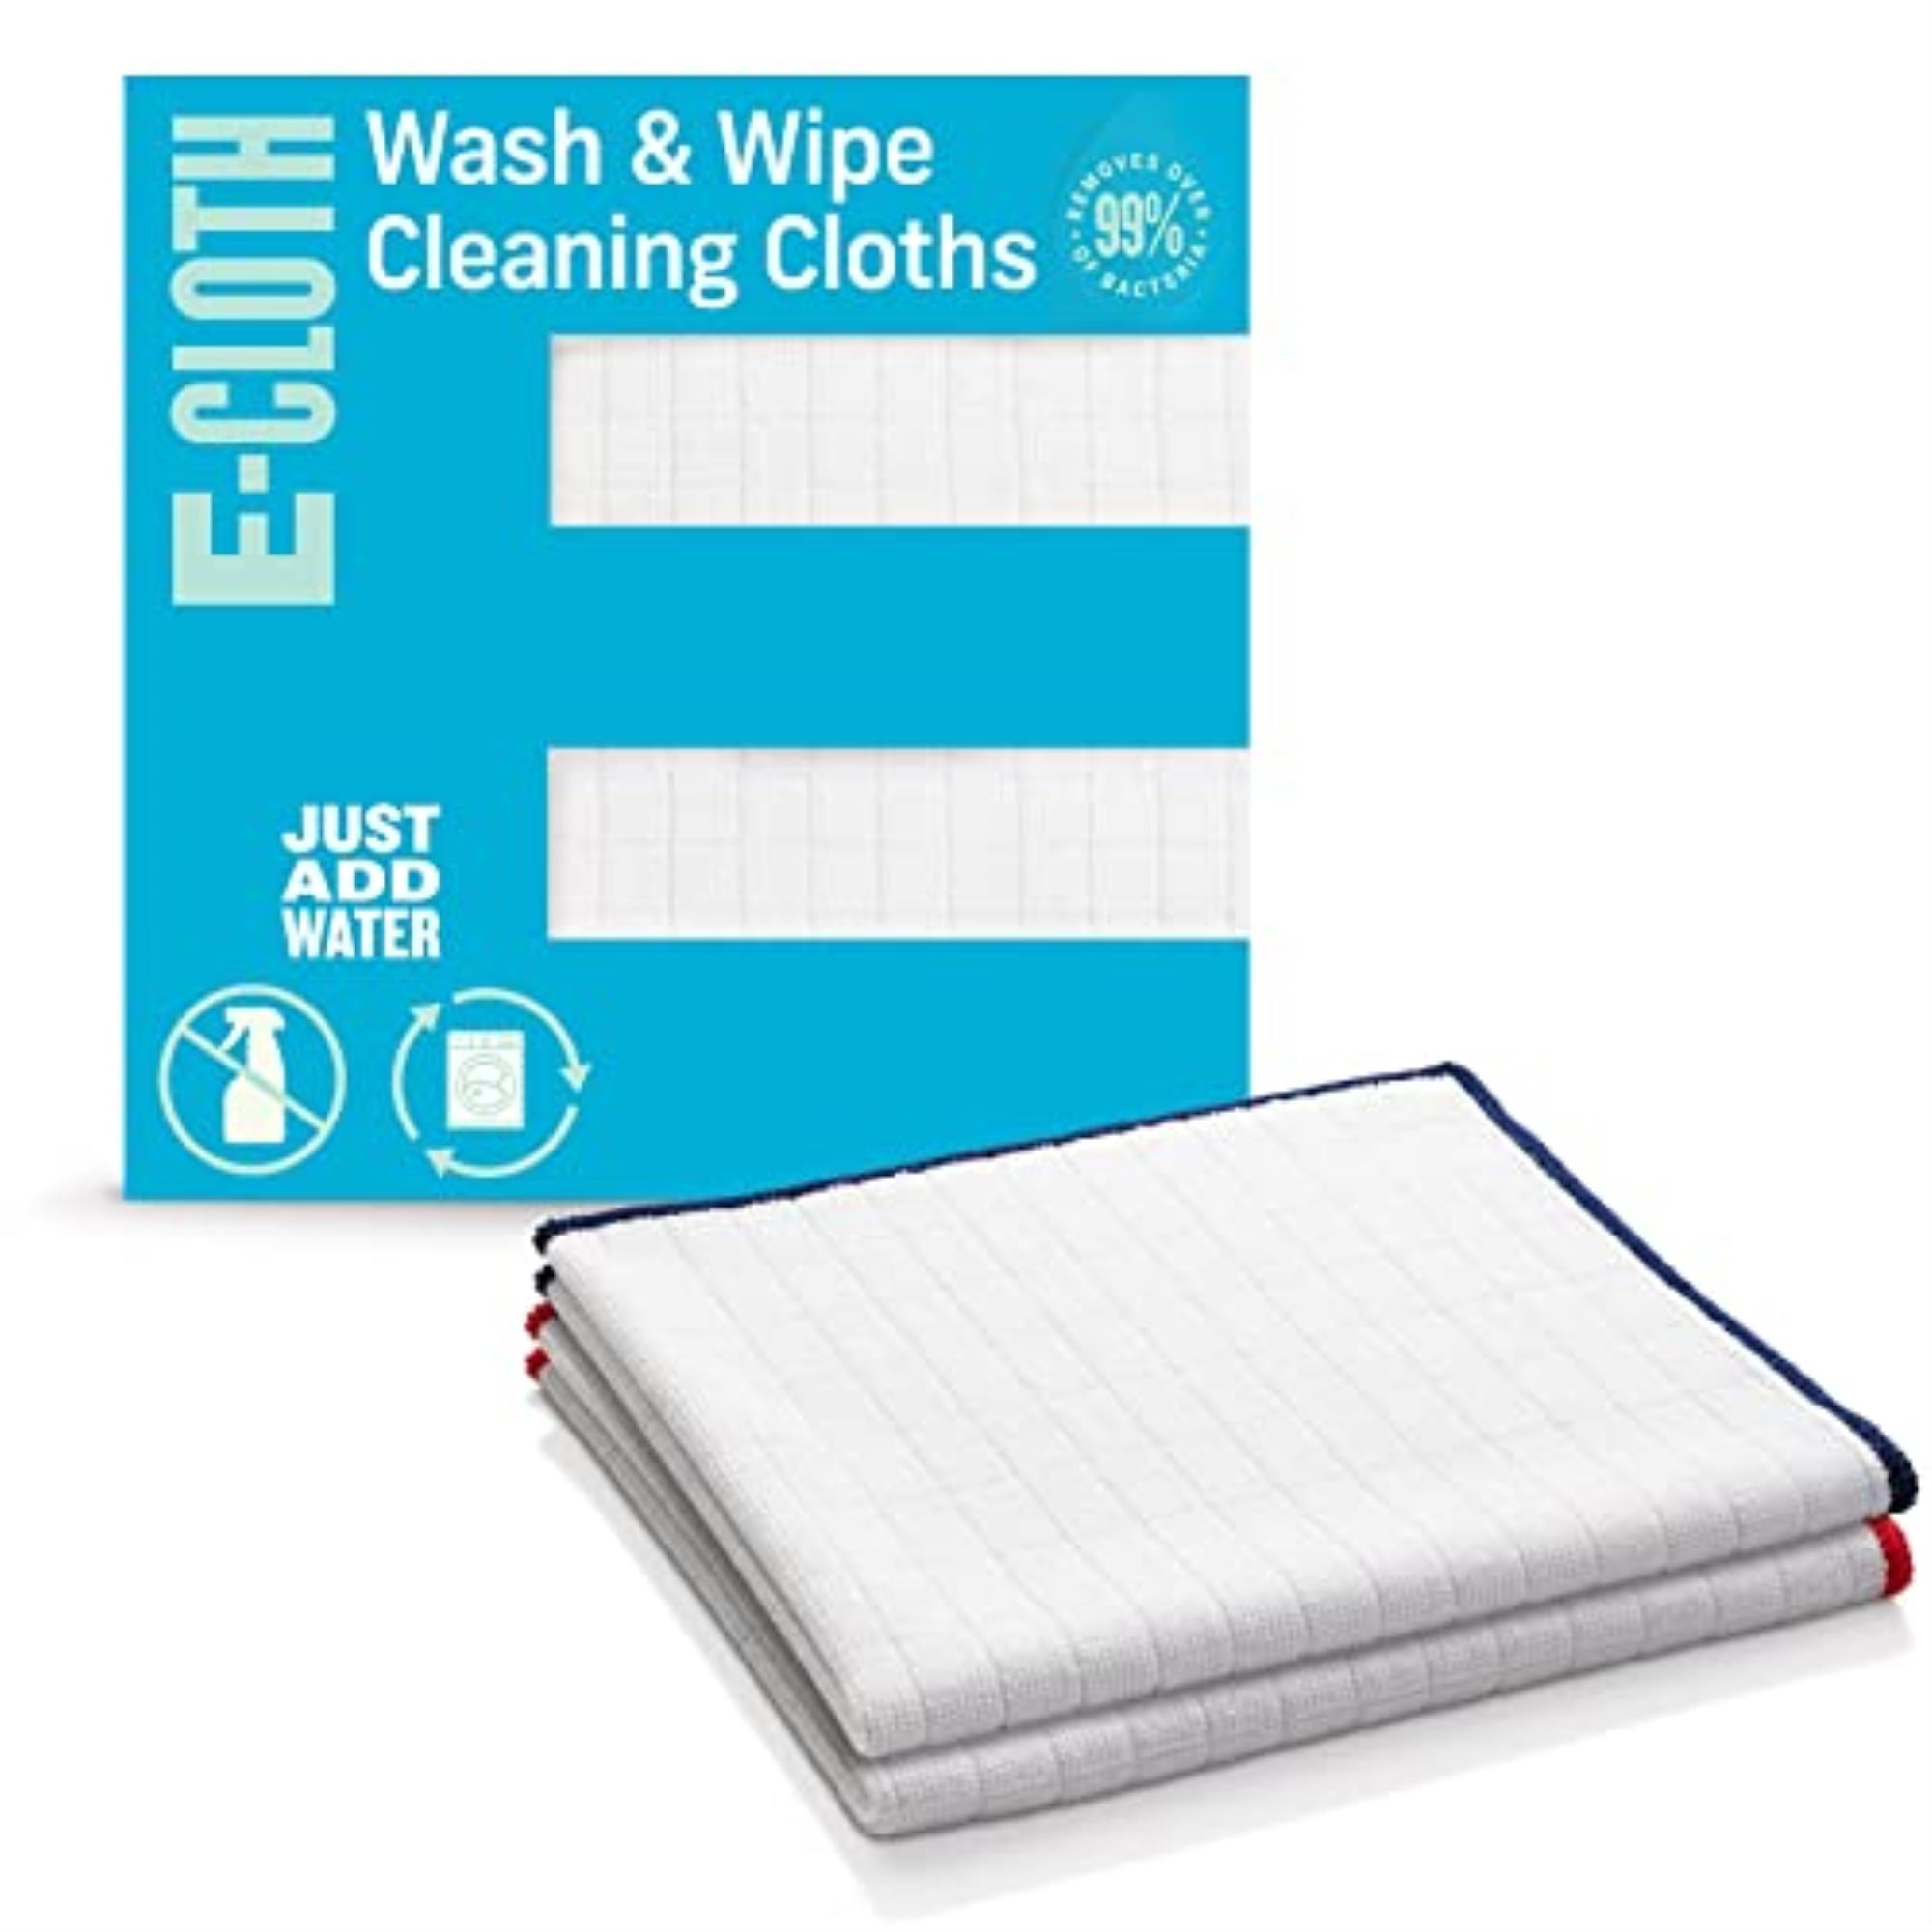 Greenwipes Disposable Dishwashing Cloth (35 Sheets) – Optimo Foods